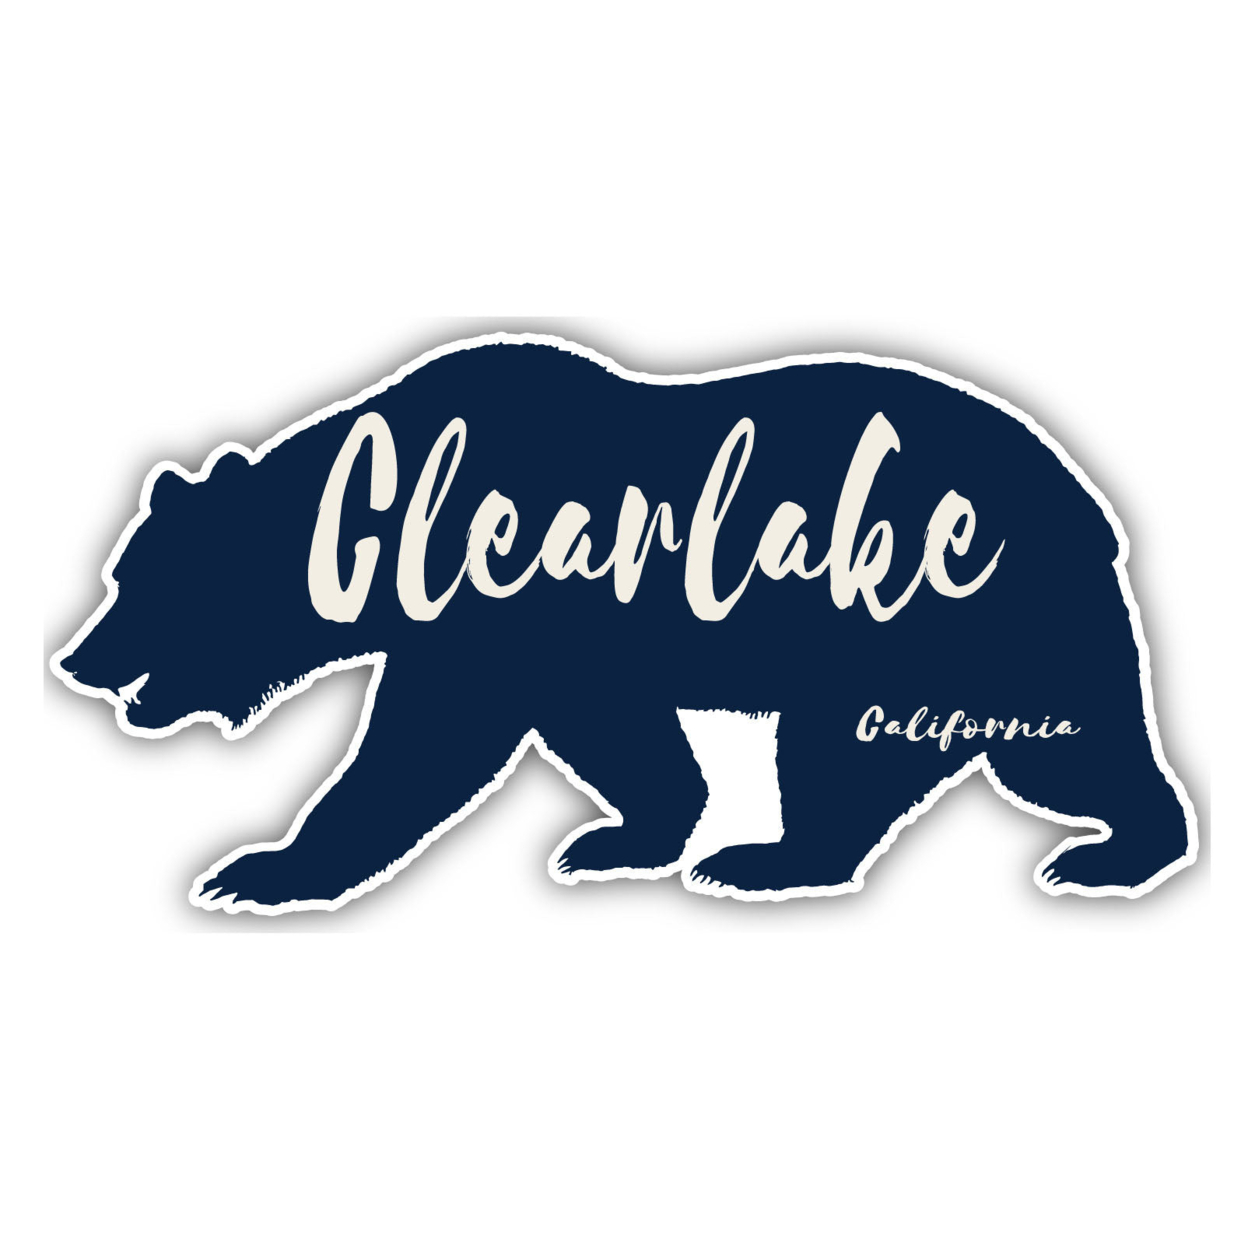 Clearlake California Souvenir Decorative Stickers (Choose Theme And Size) - Single Unit, 12-Inch, Tent